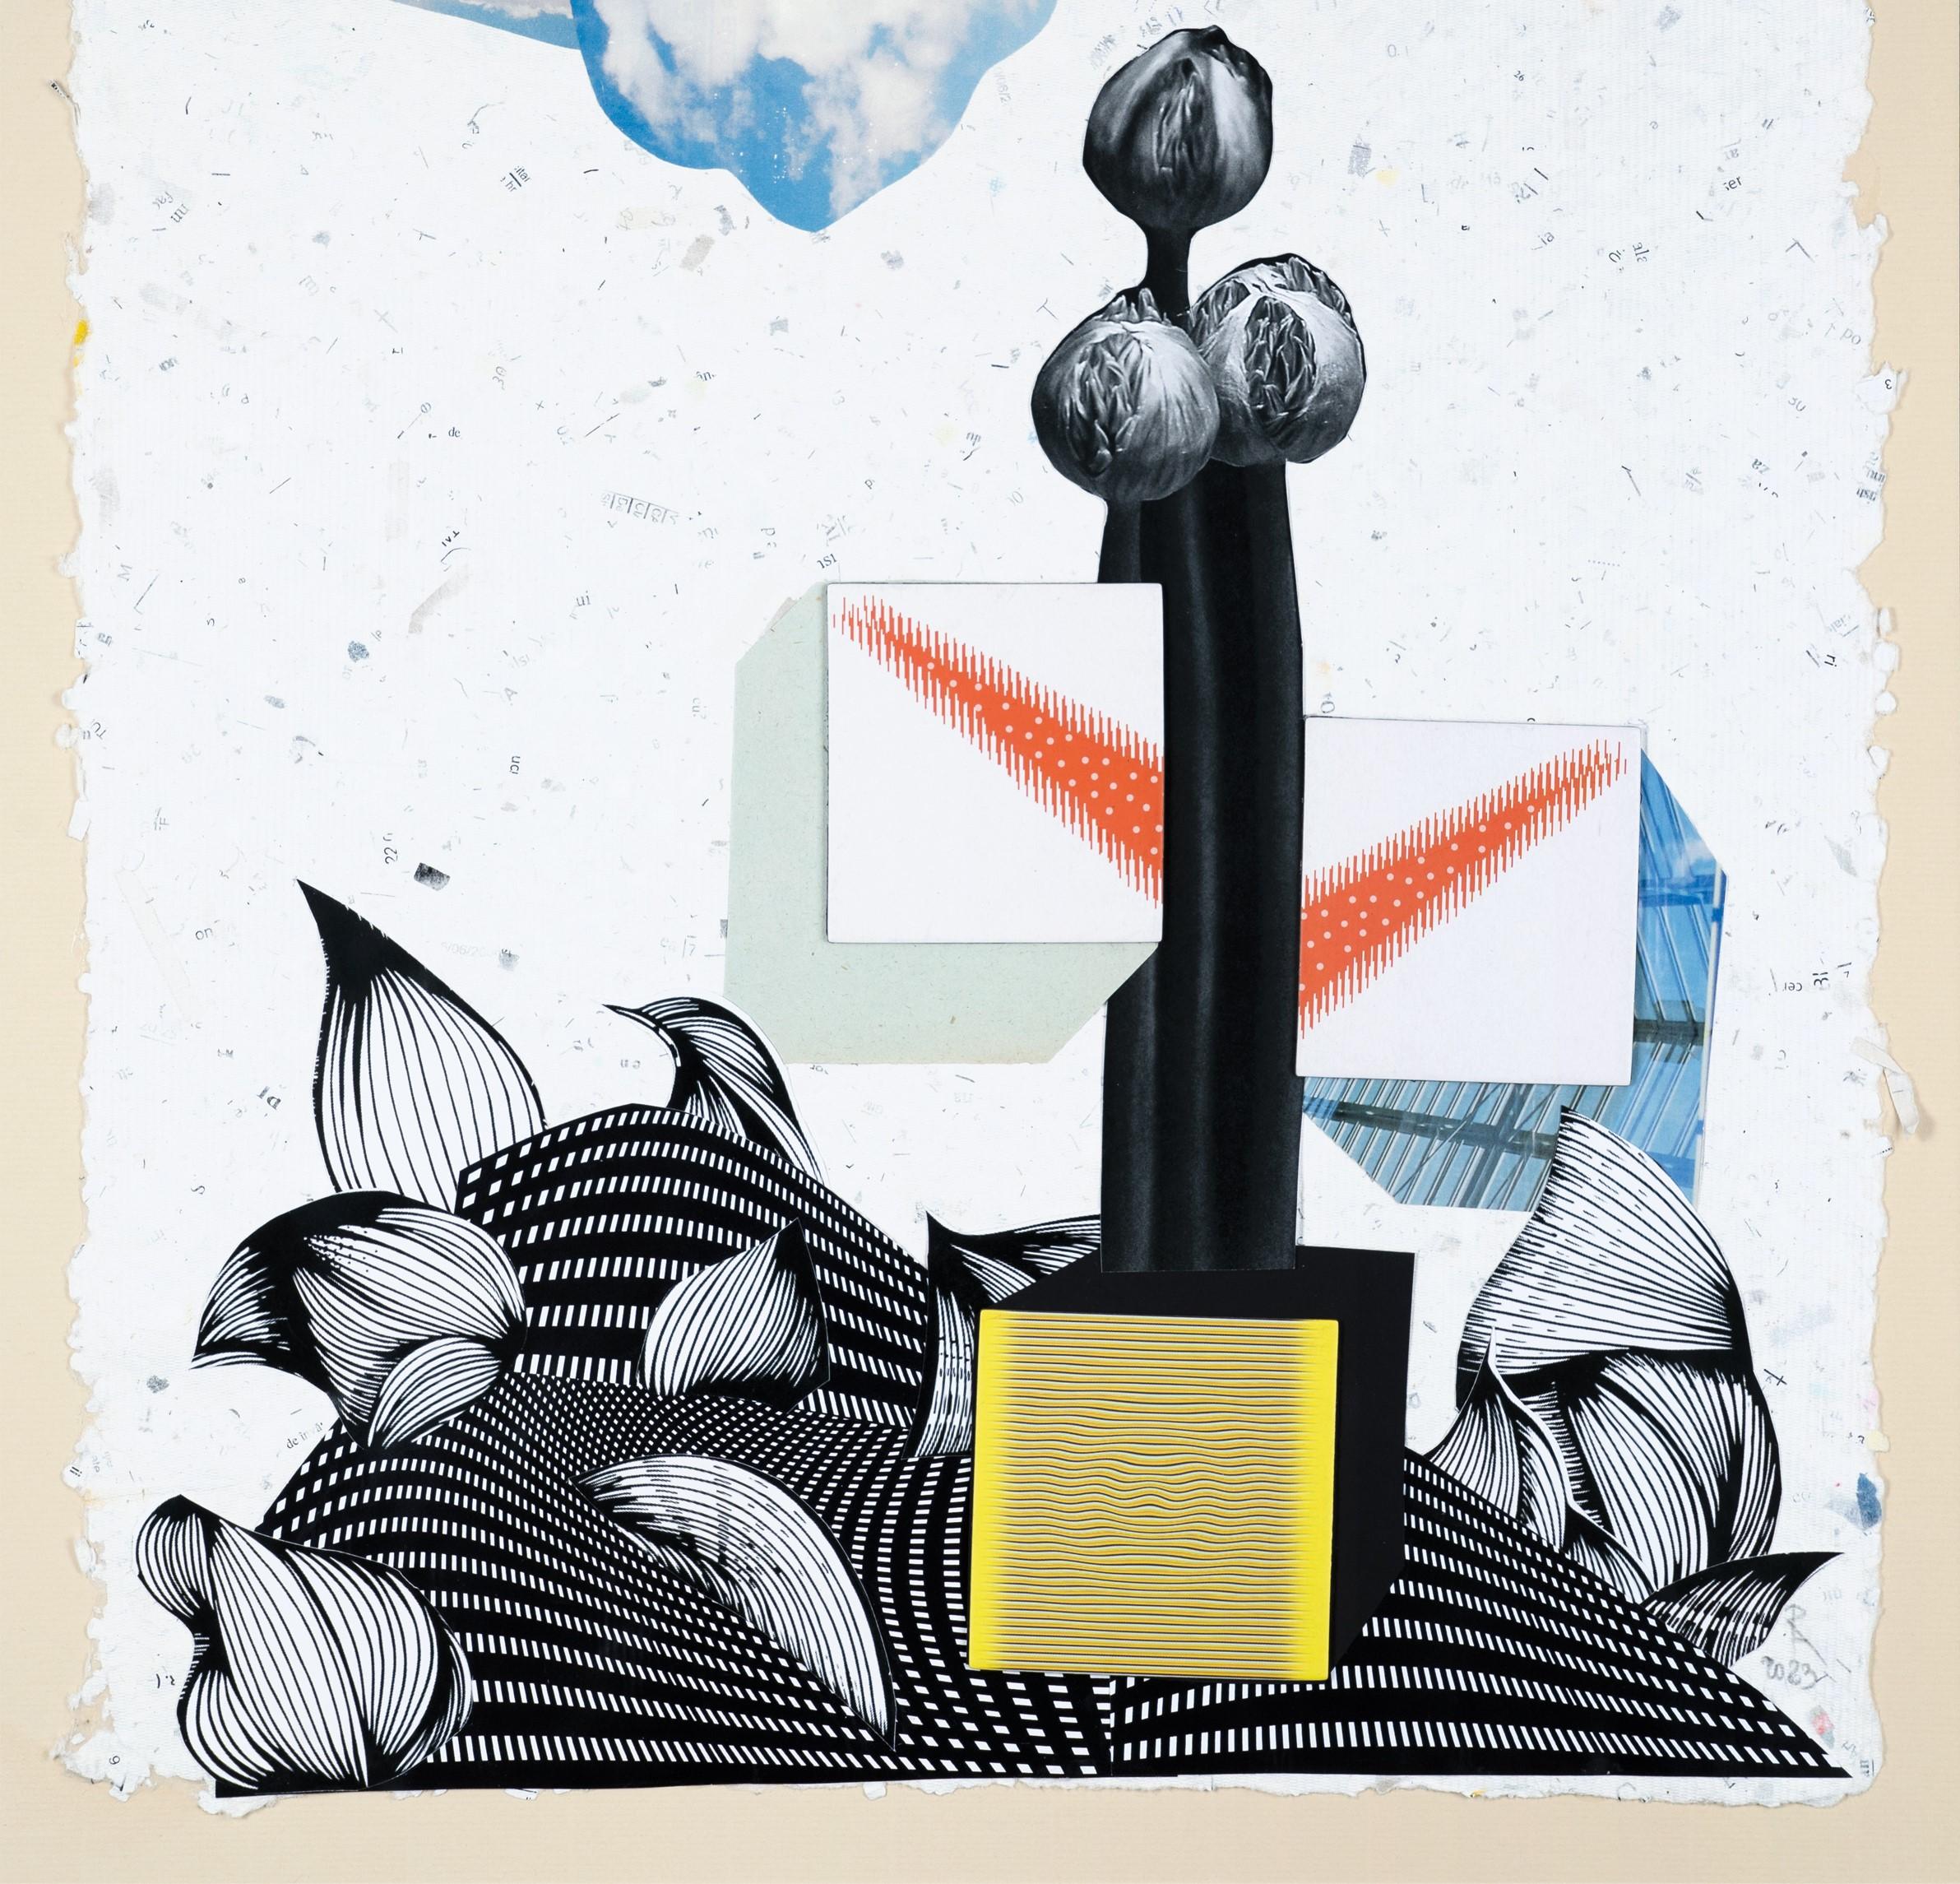 The Flower - Paper, Landscape, Collage, 21st Century, Surrealism - Contemporary Mixed Media Art by Raluca Arnăutu